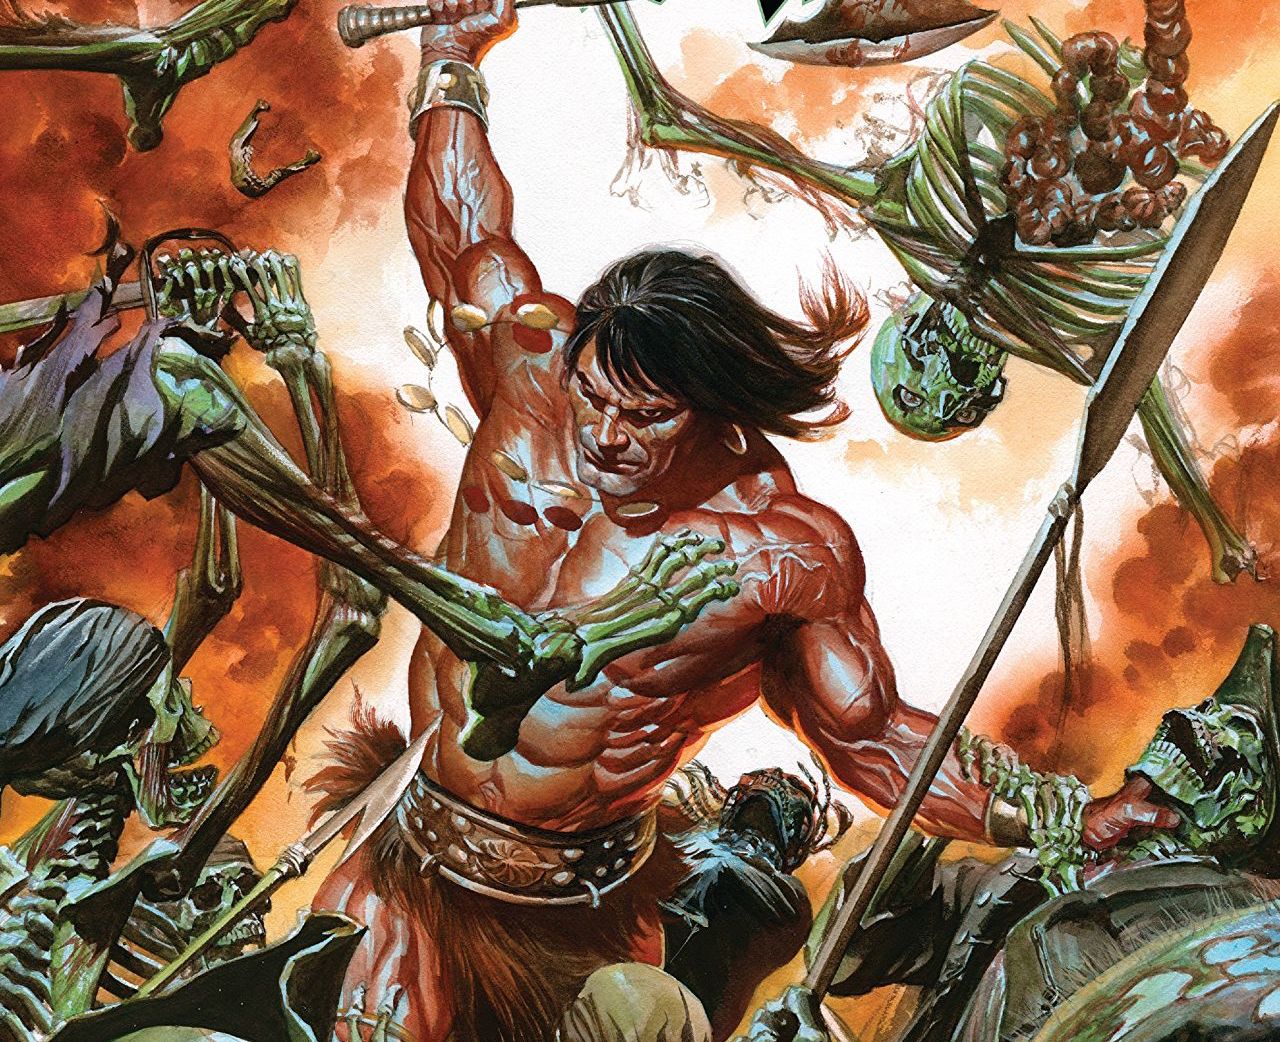 Savage Sword of Conan Vol. 1: The Cult of Koga Thun Review